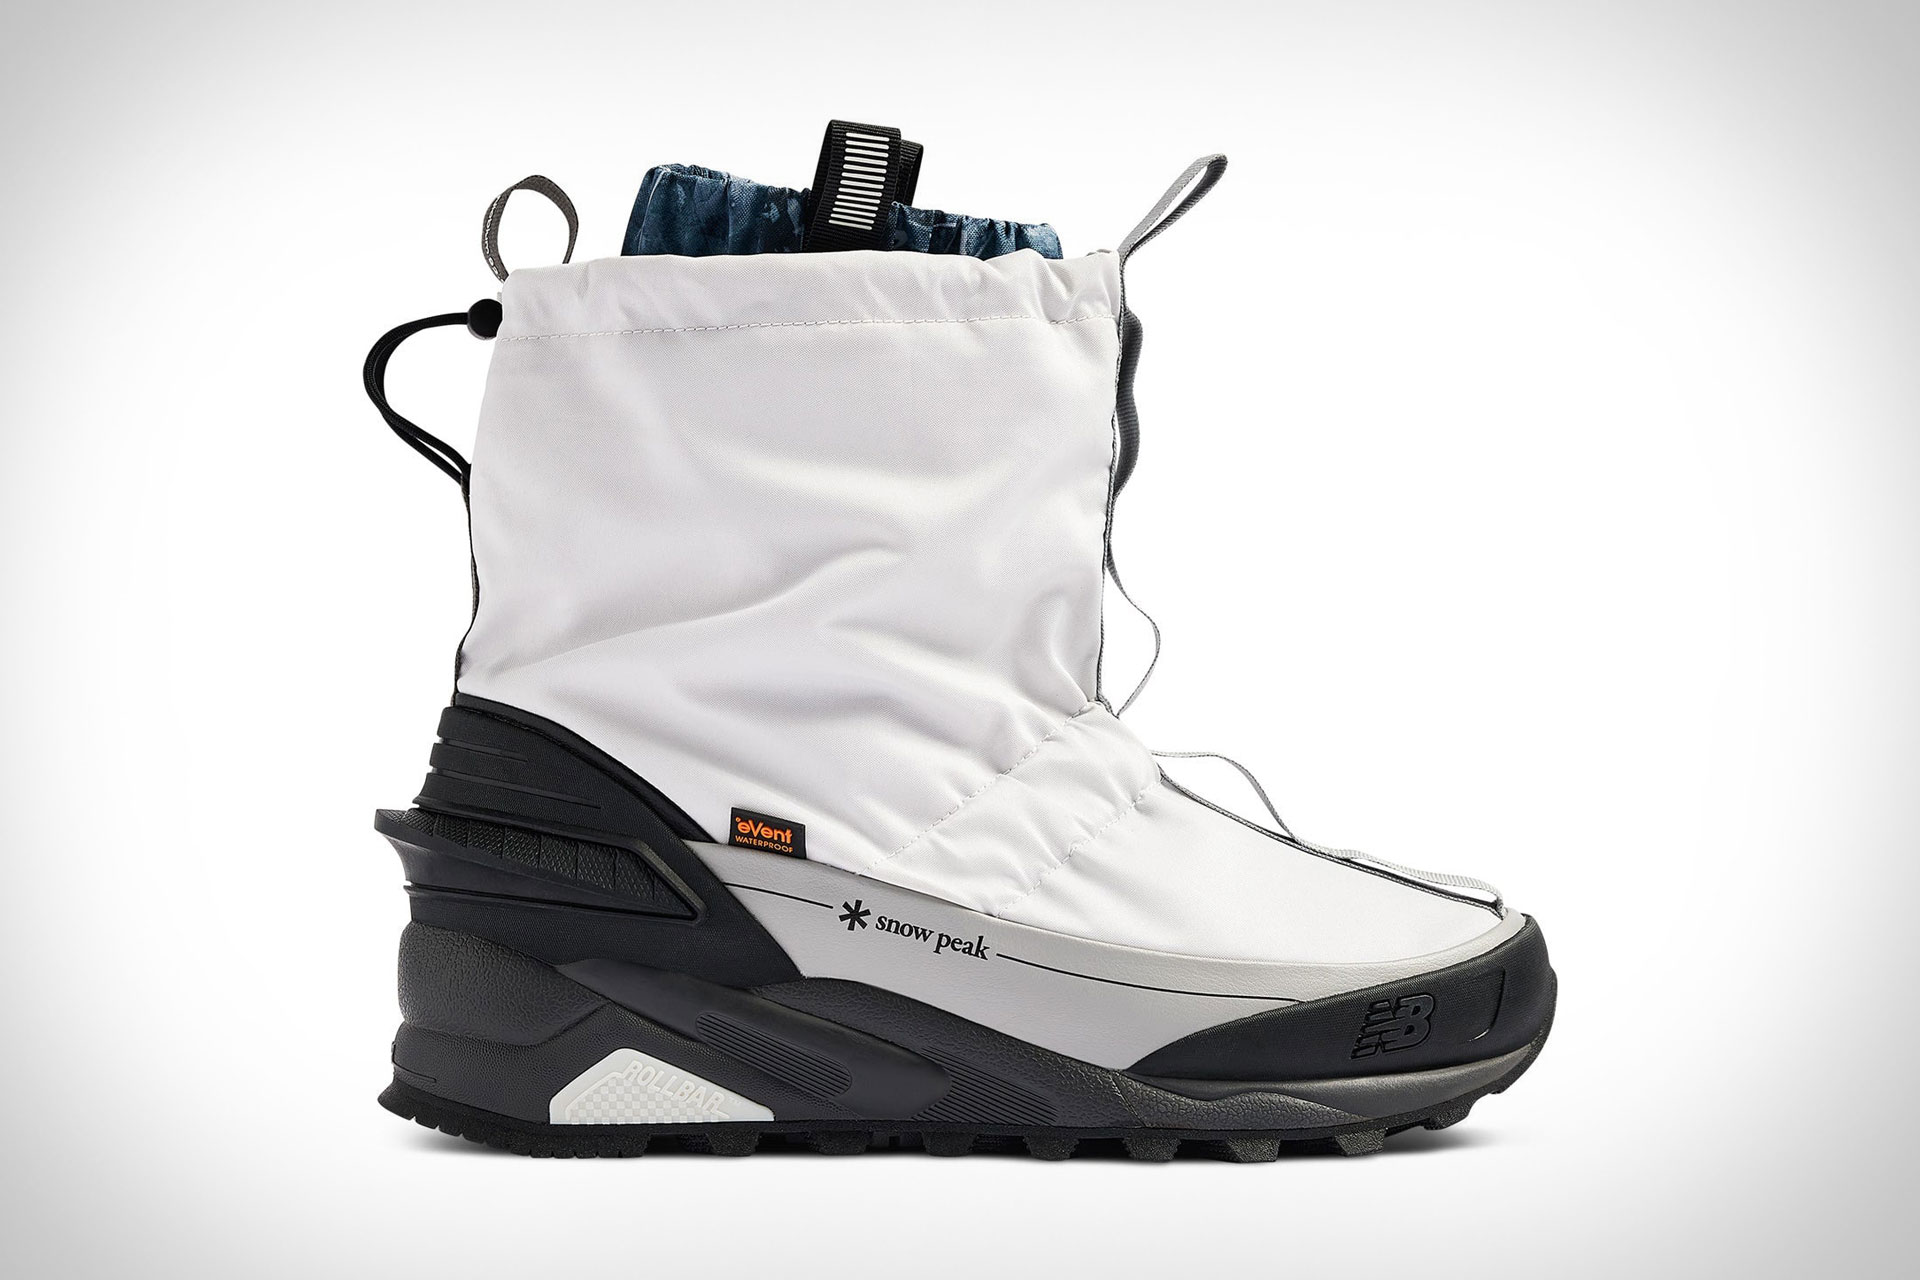 New Balance x Snow Peak TDS Niobium Concept 3 Boots | Uncrate